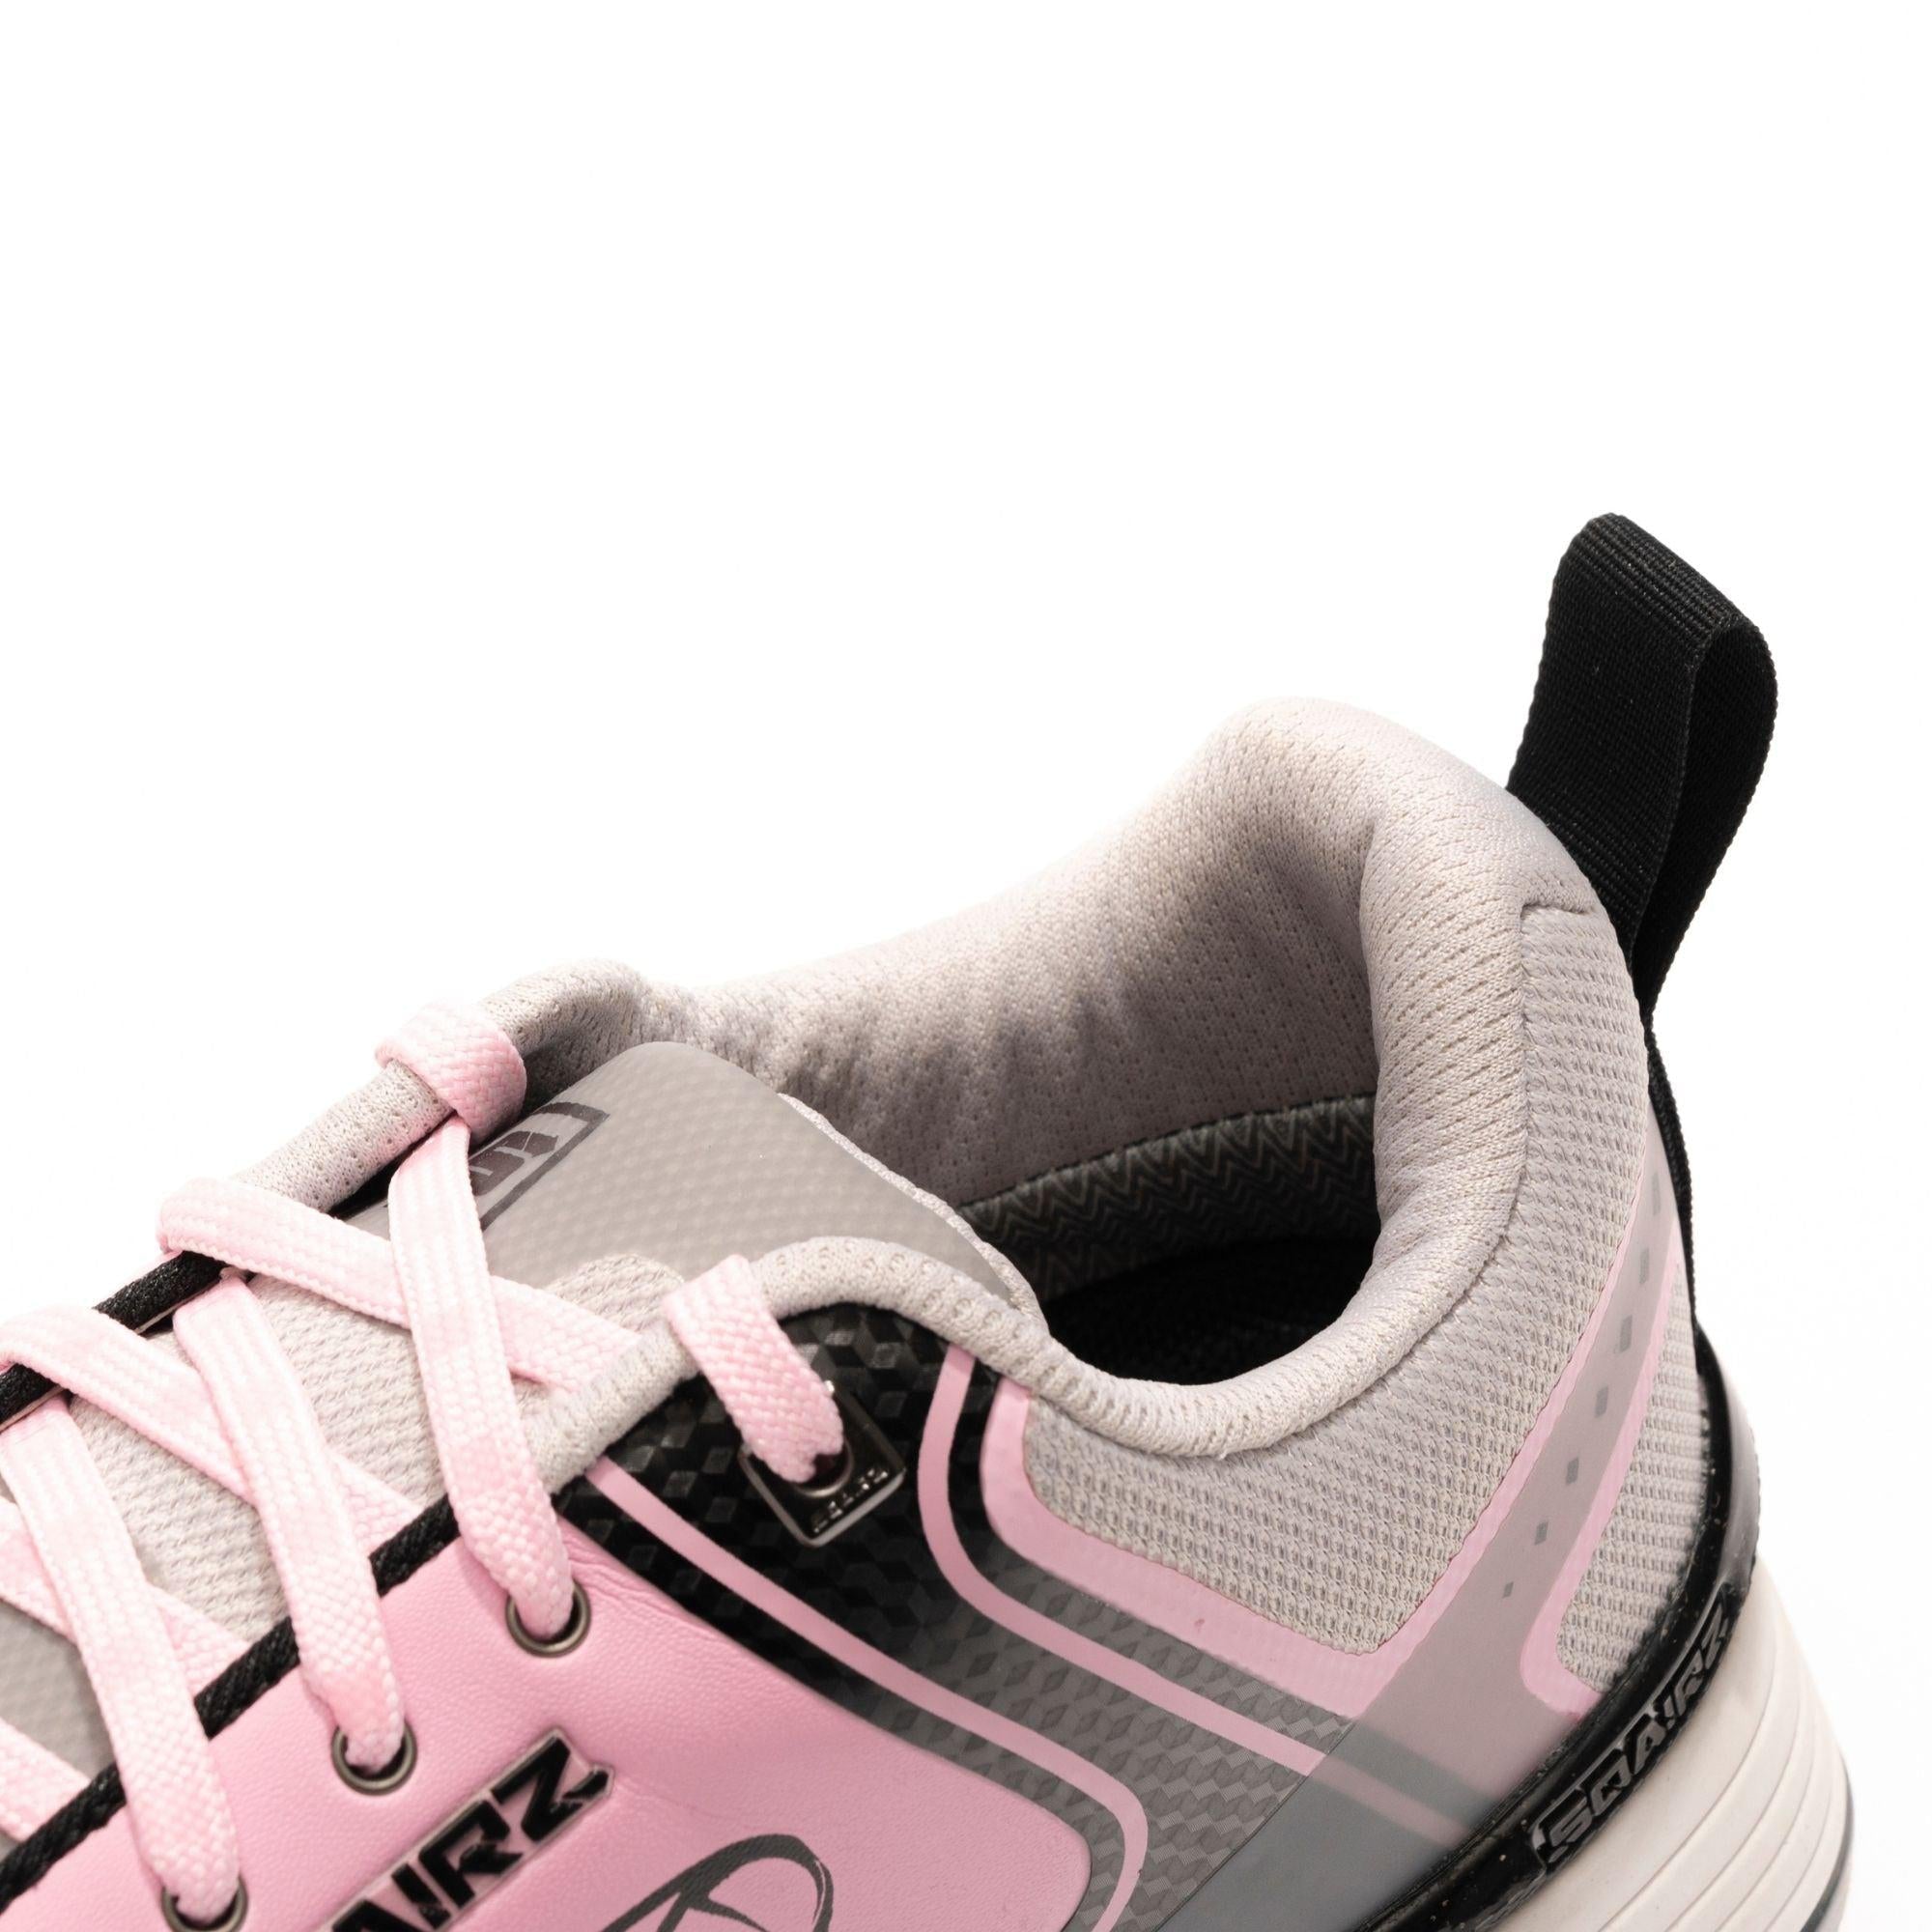 TRS Freedom Comfort Shoes-Black-Size 6M | eBay